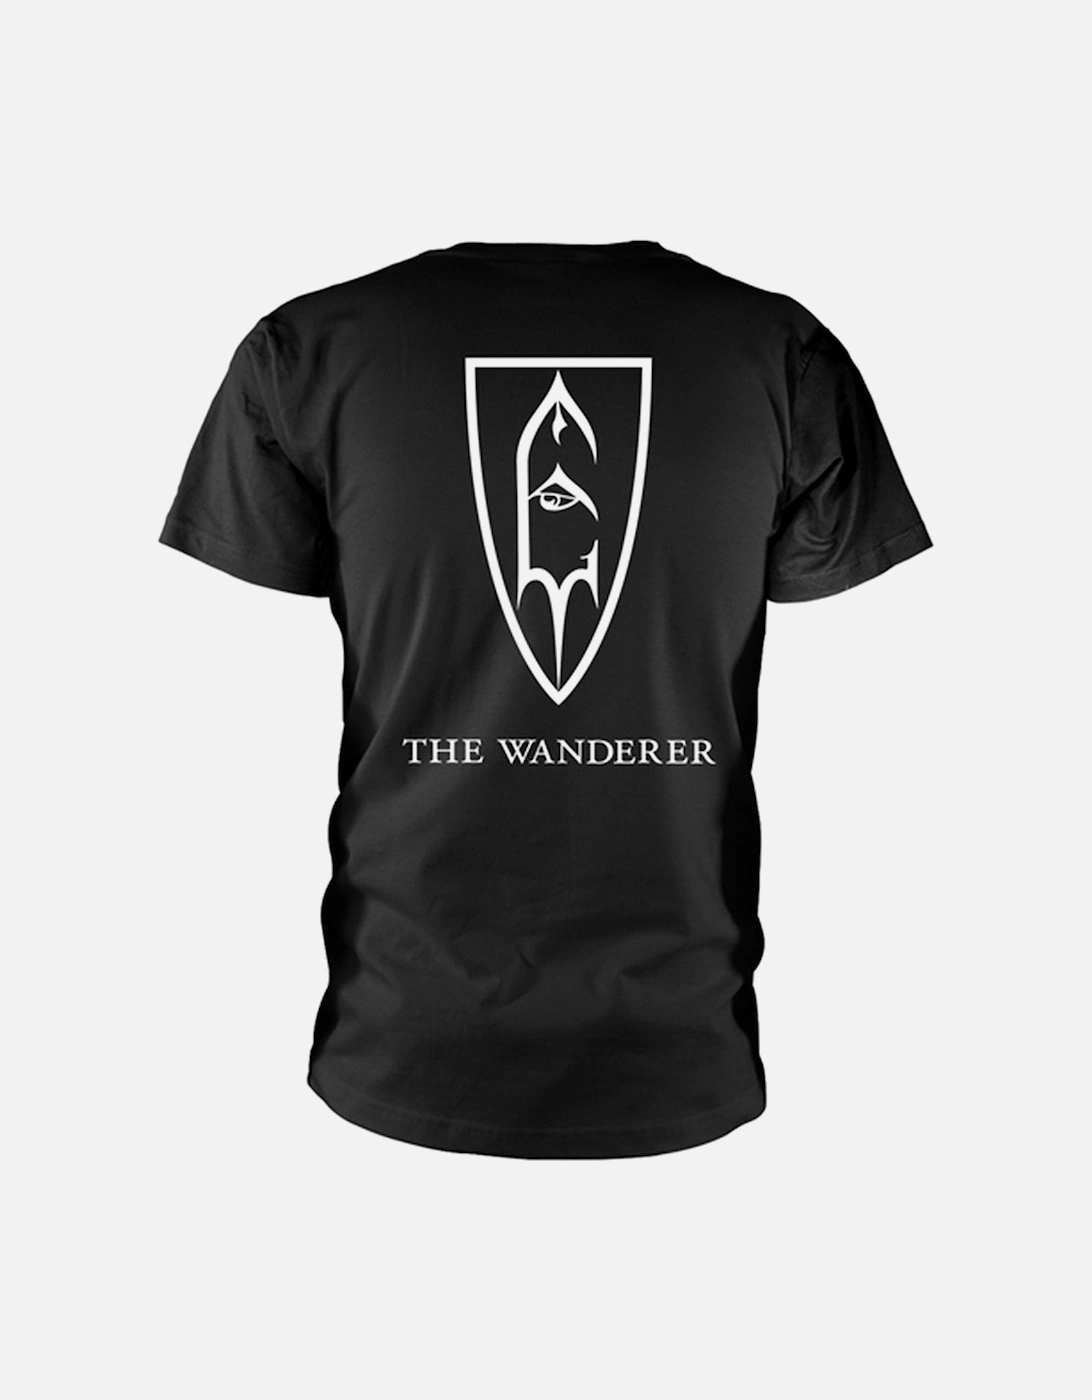 Unisex Adult The Wanderer T-Shirt